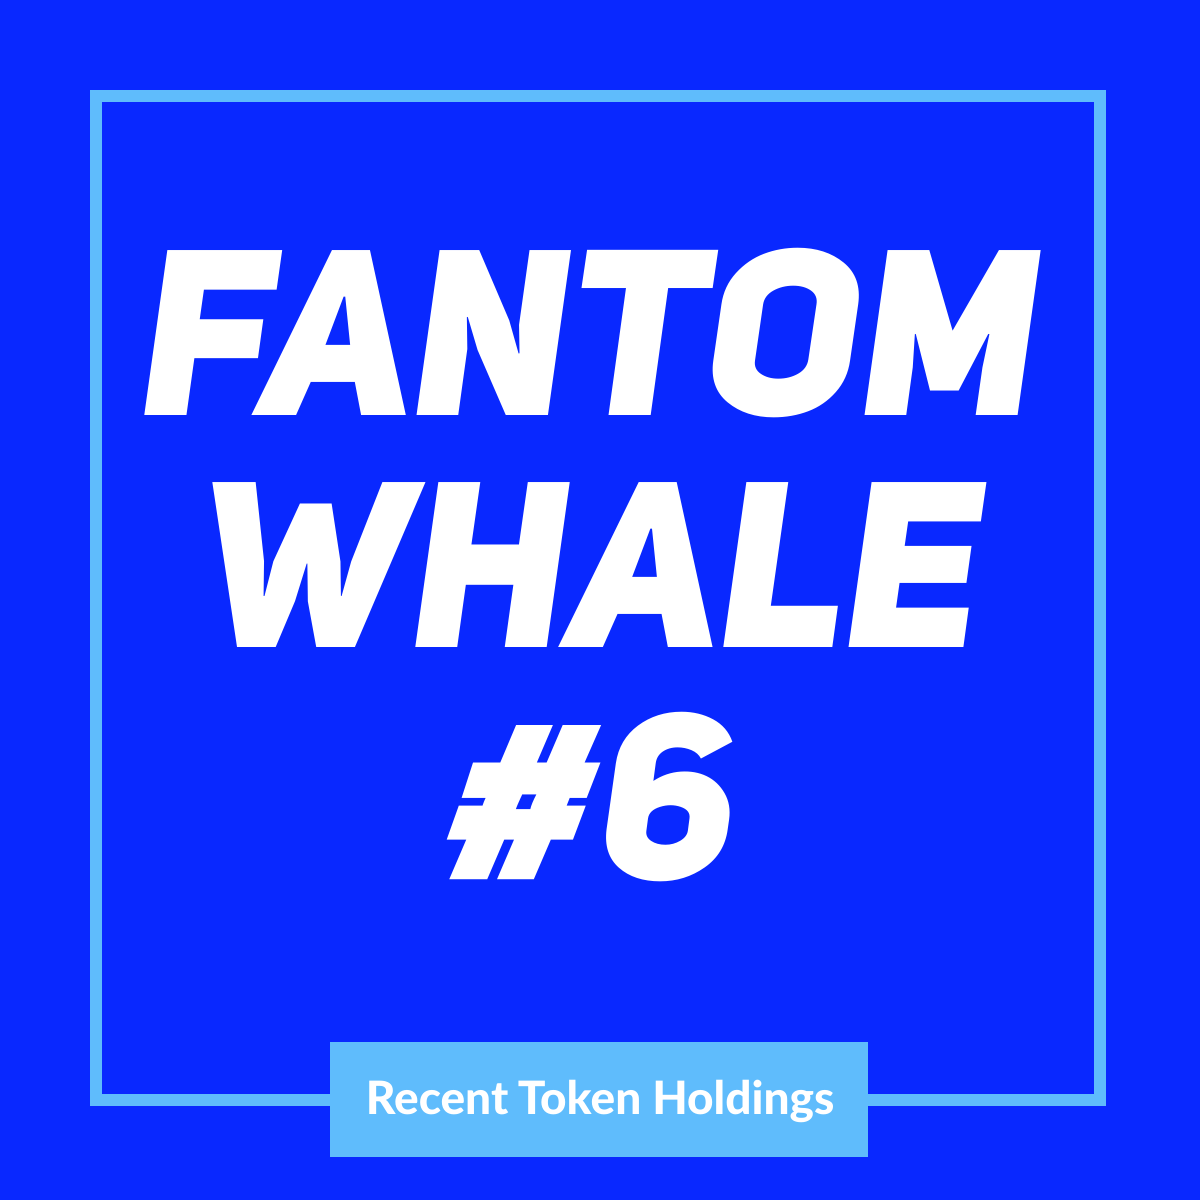 Fantom Whale #6